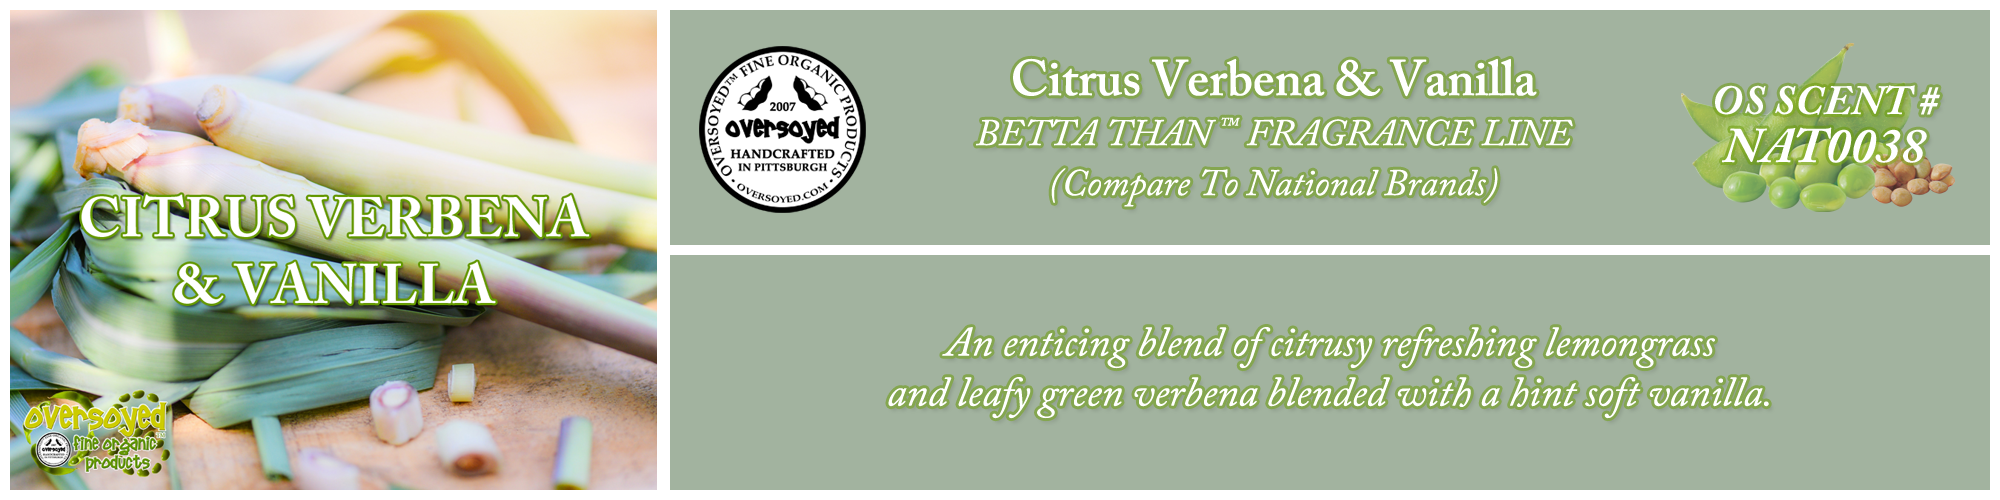 Citrus Verbena & Vanilla Handcrafted Products Collection